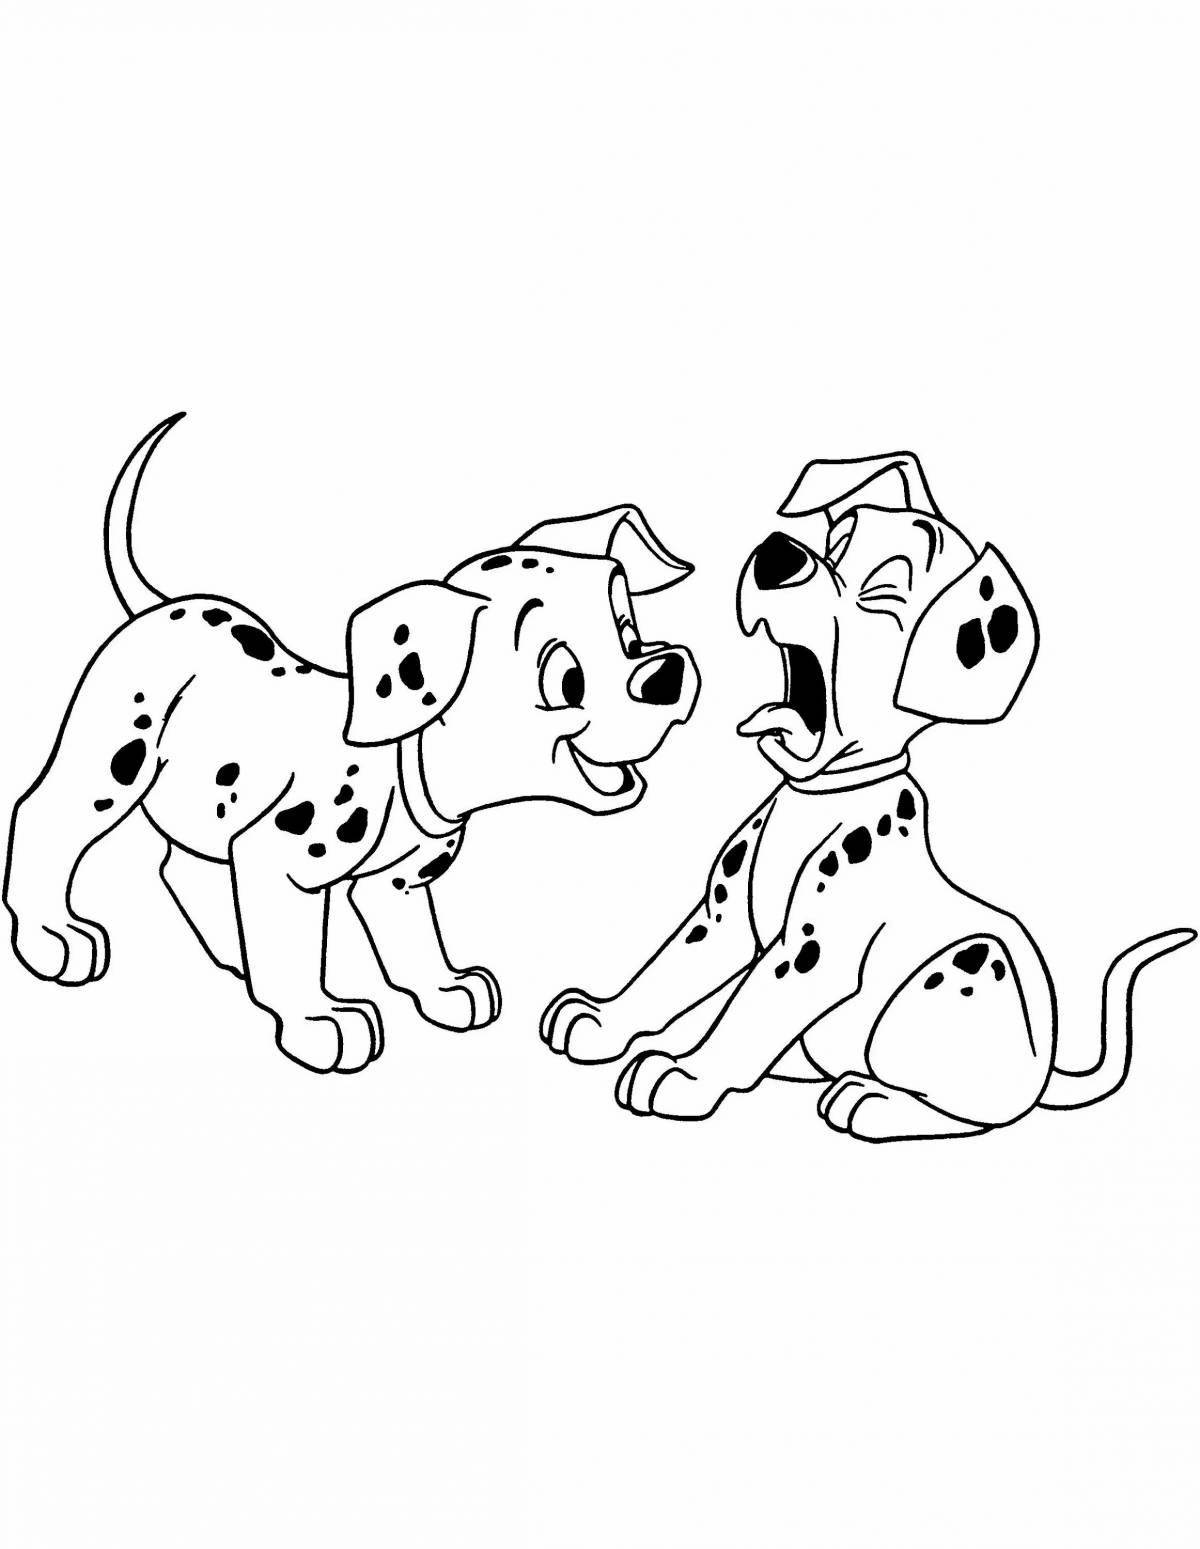 Animated dalmatian dog coloring book